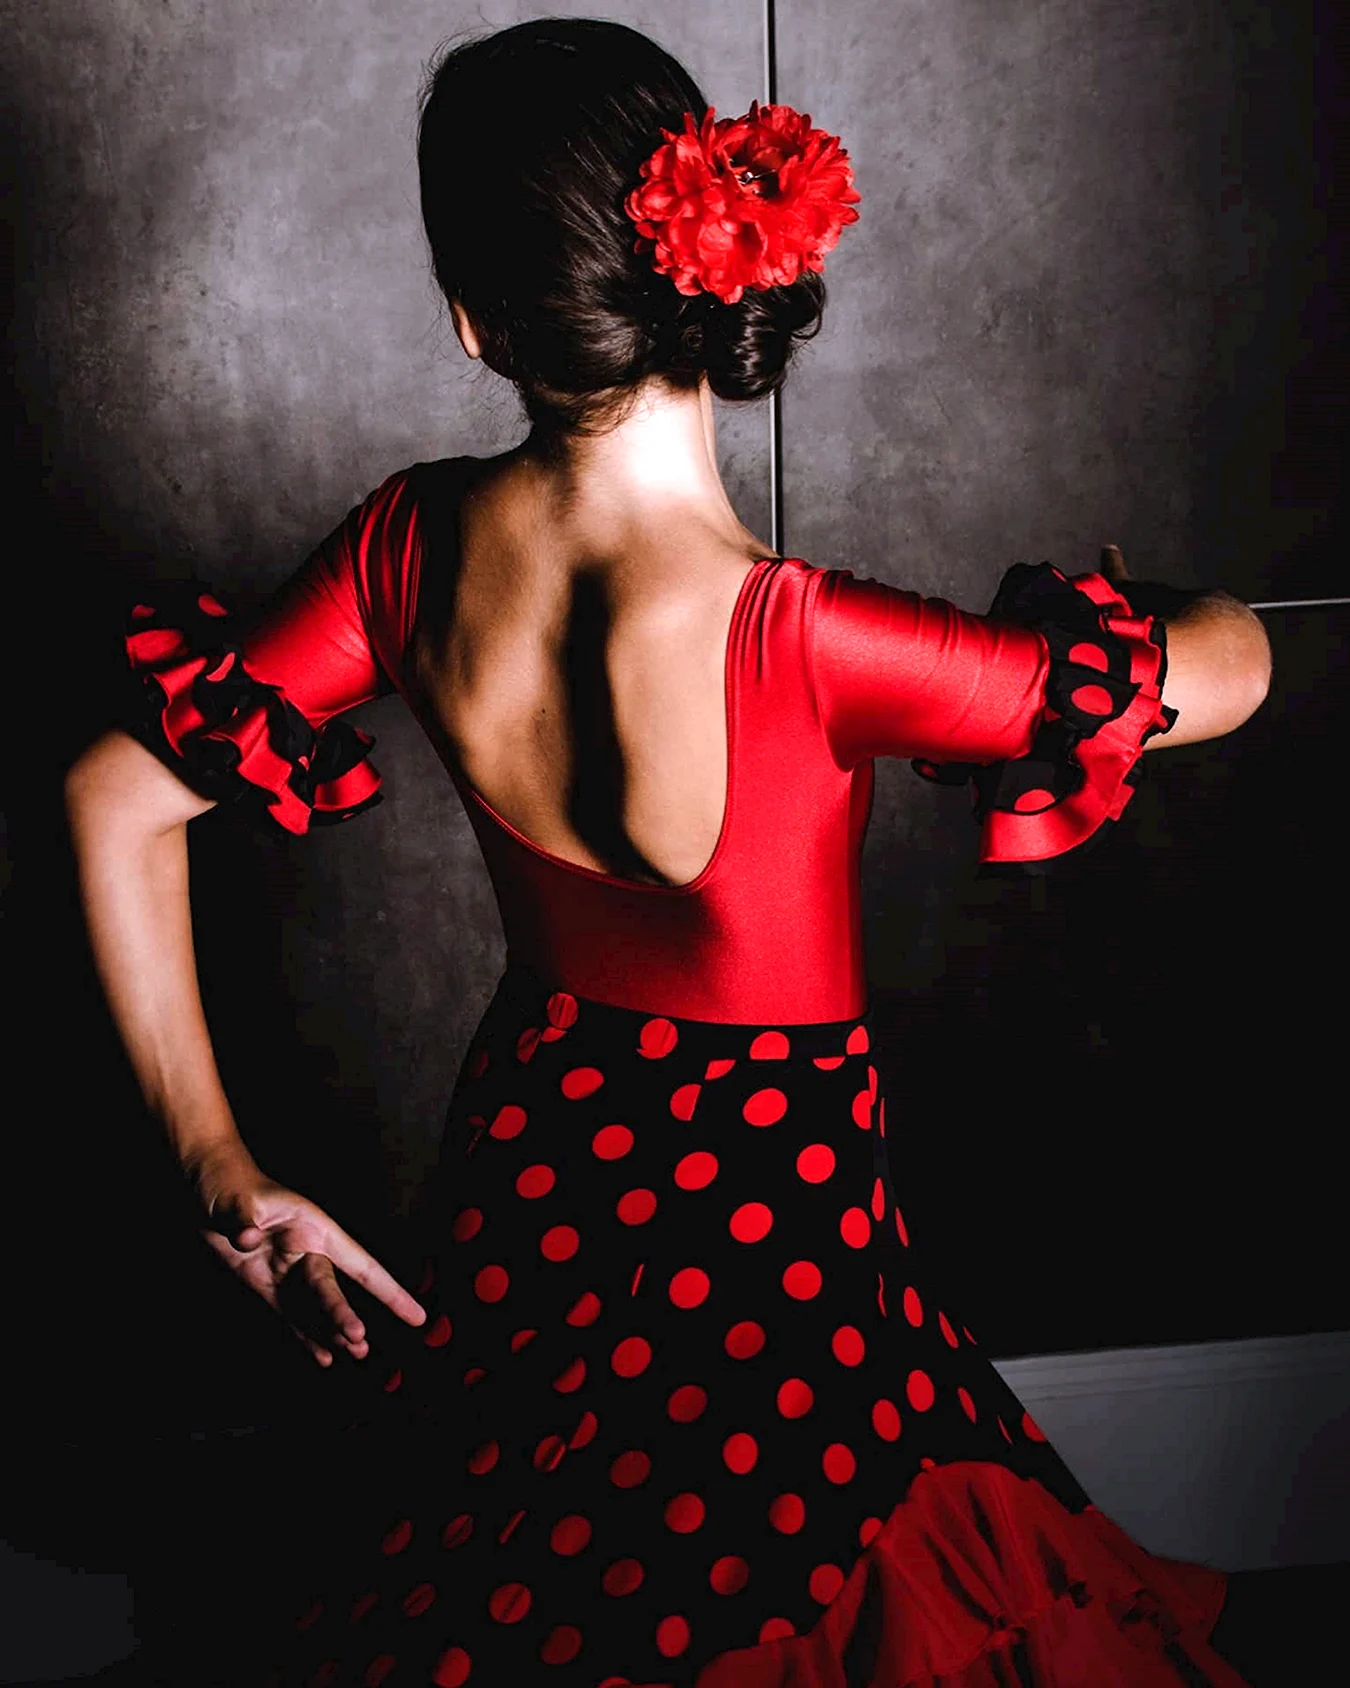 Фламенко с короткой стрижкой